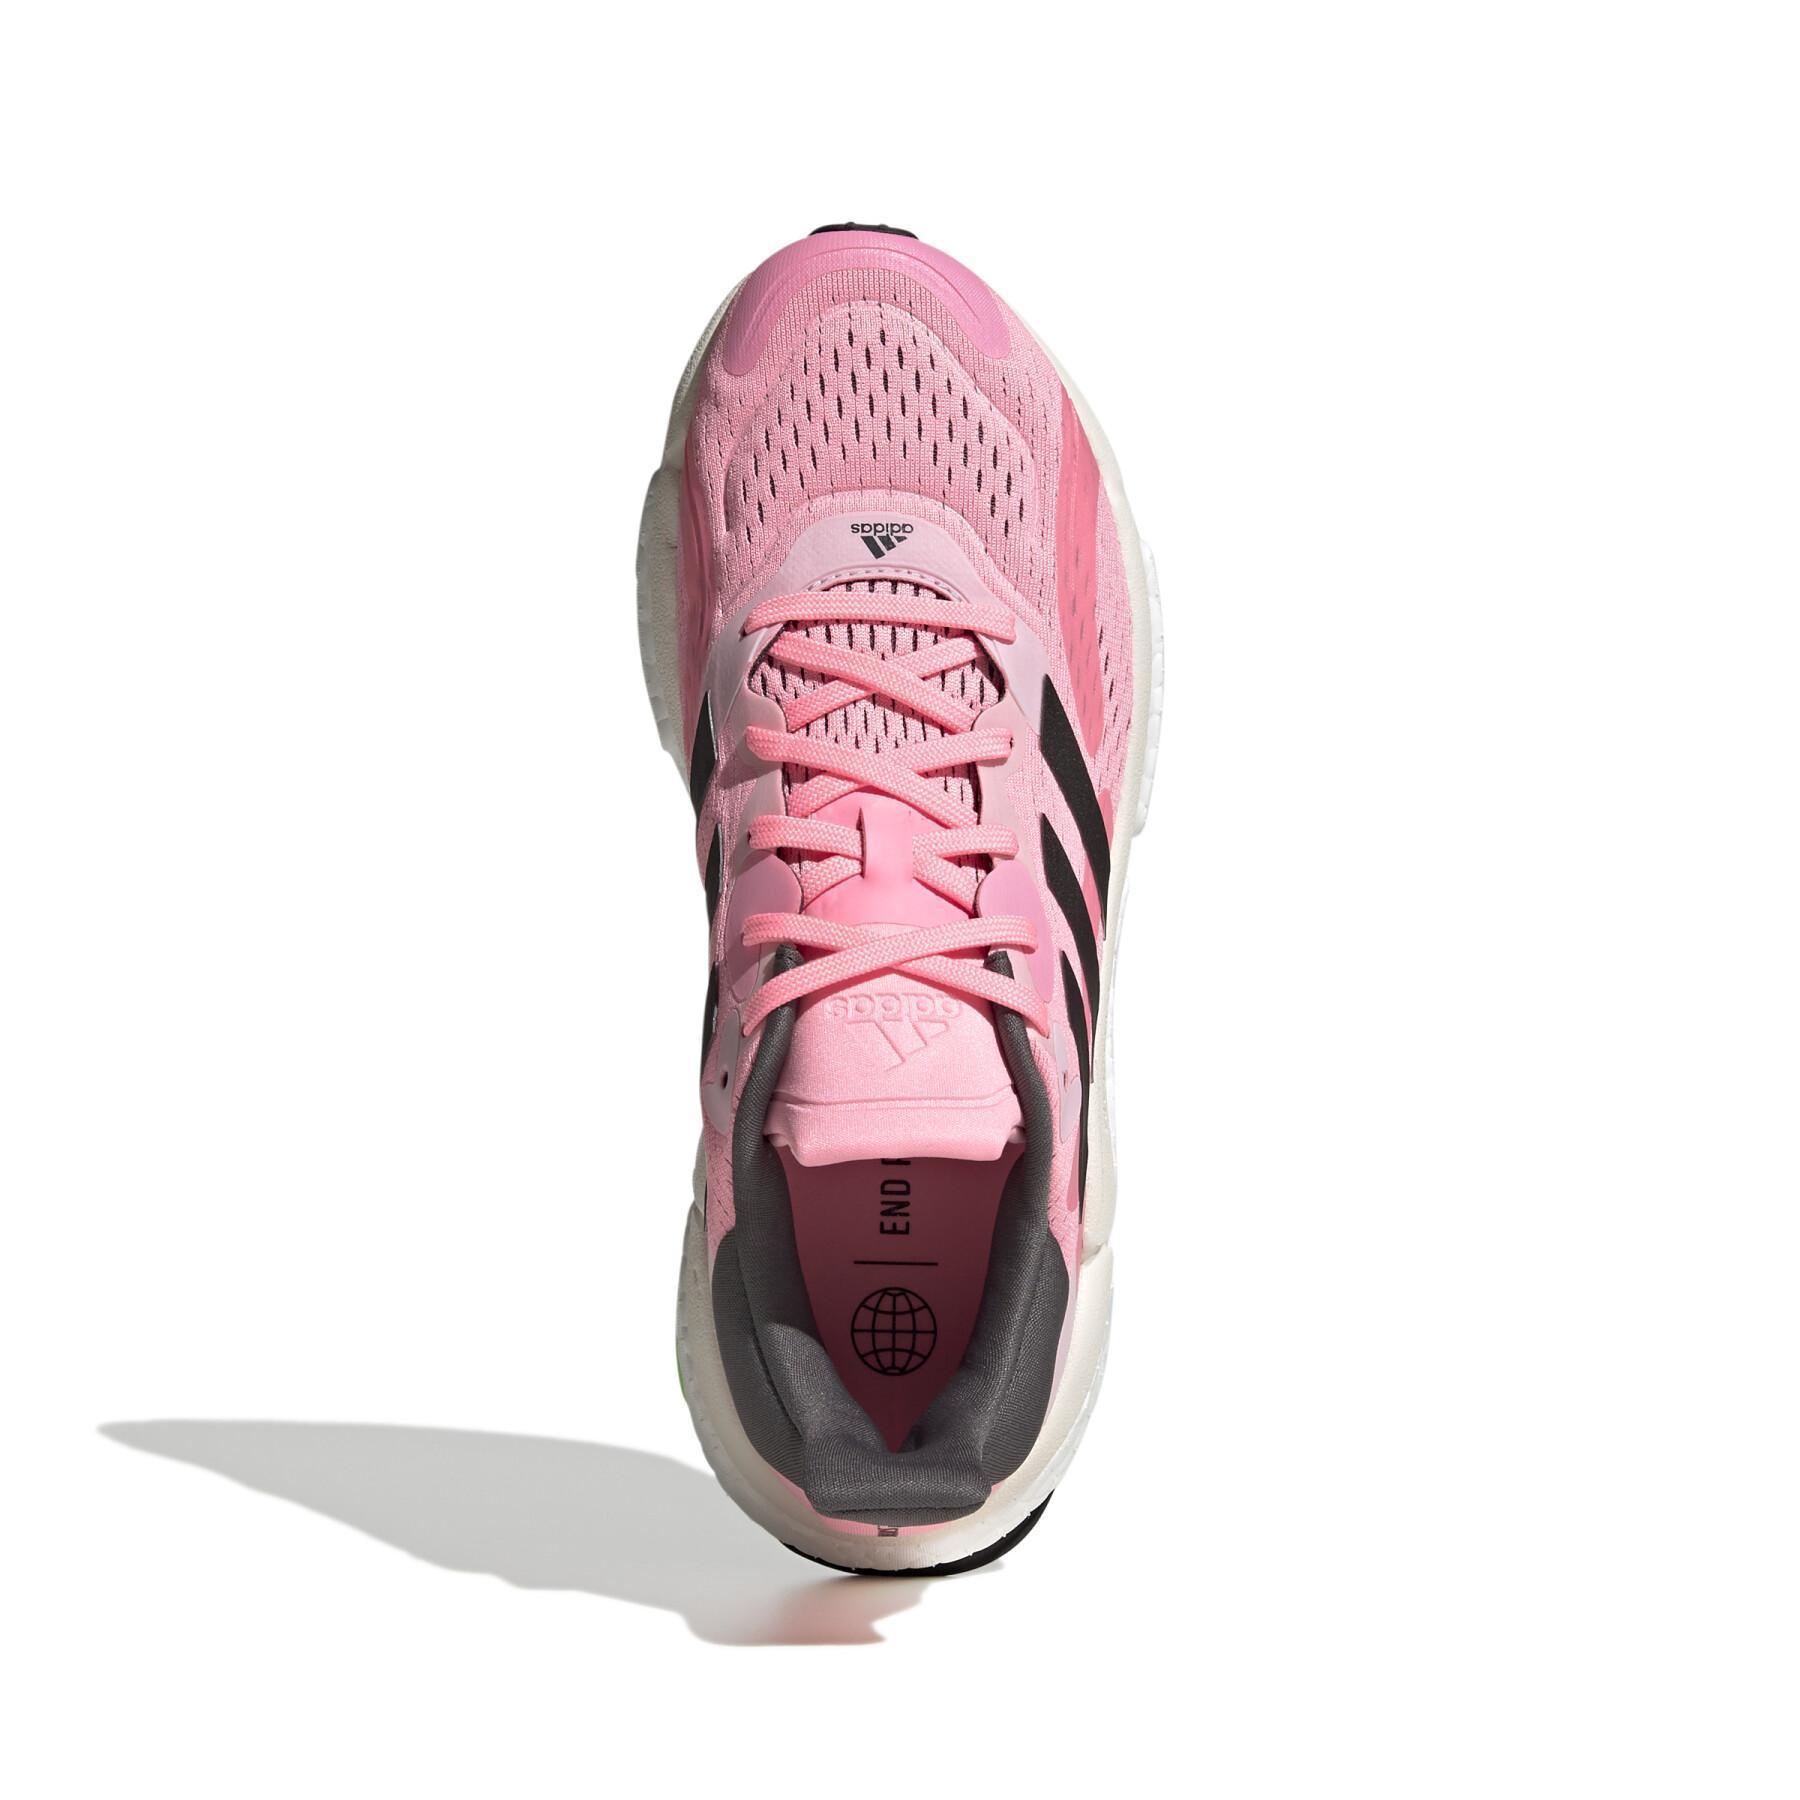 Zapatillas de running para mujer adidas Solar boost 4